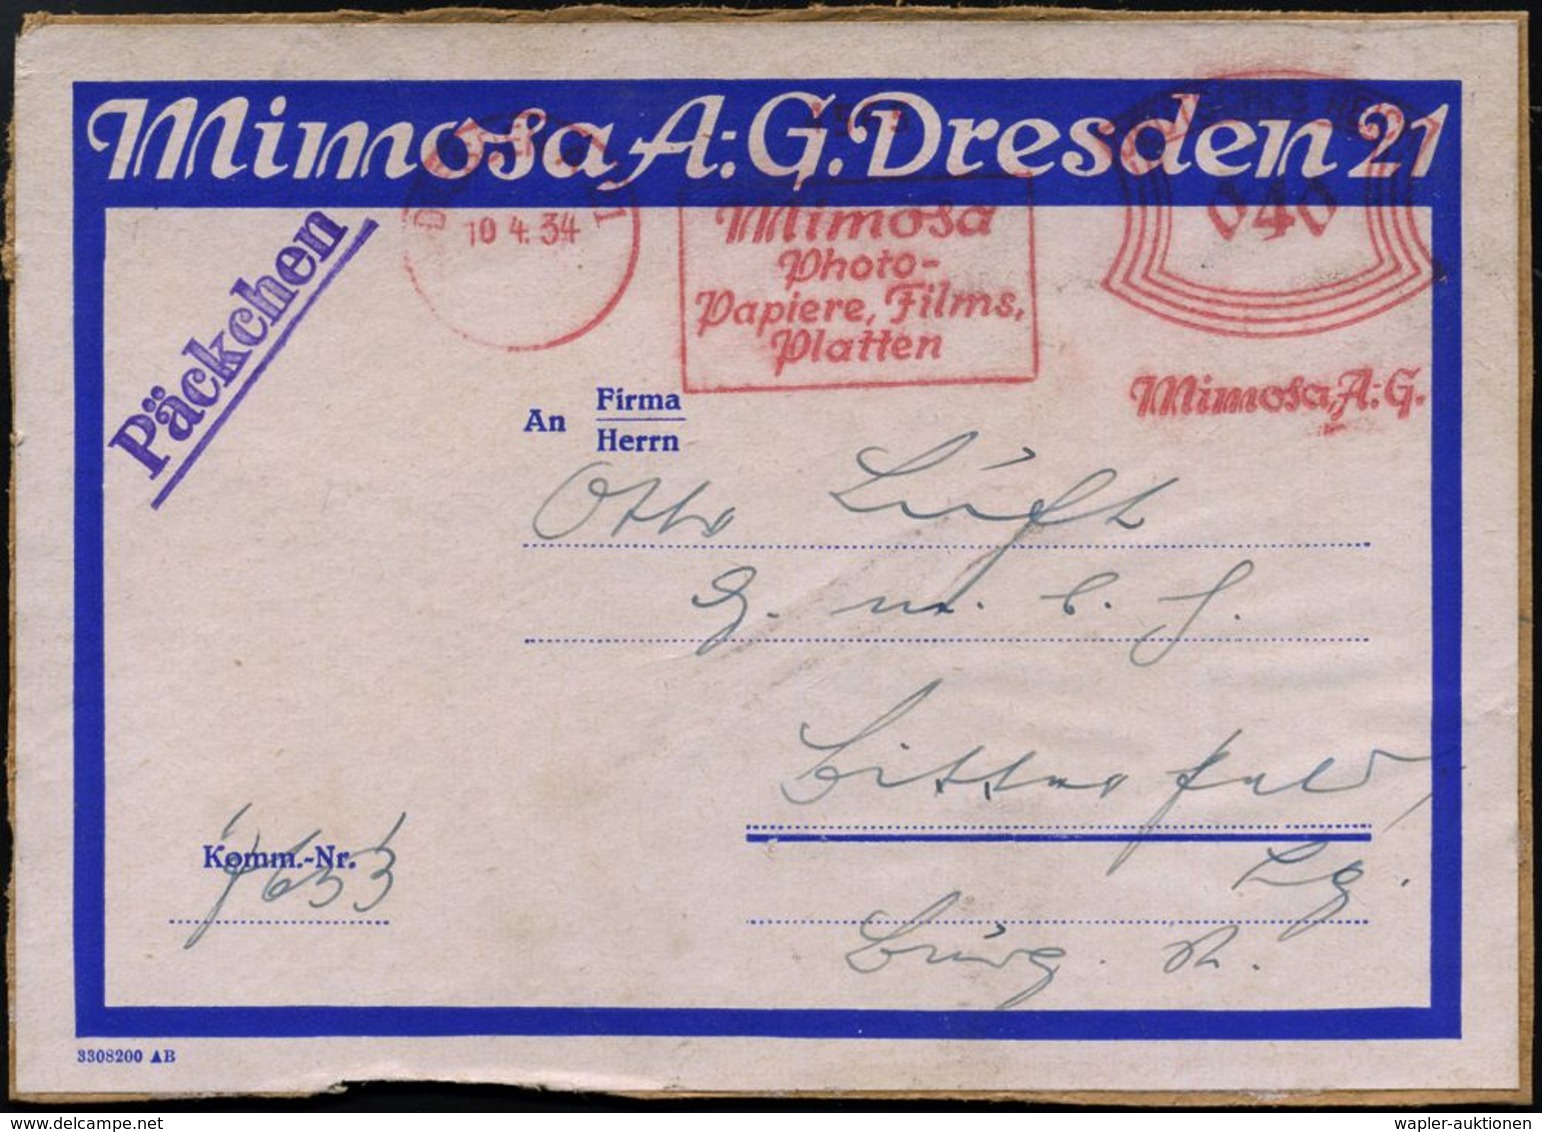 FOTOGRAFIE / KAMERAS / FOTOINDUSTRIE : DRESDEN A 21/ Mimosa/ Photo-/ Papiere,Films/ Platten.. 1934 (10.4.) AFS 040 Pf. A - Photographie